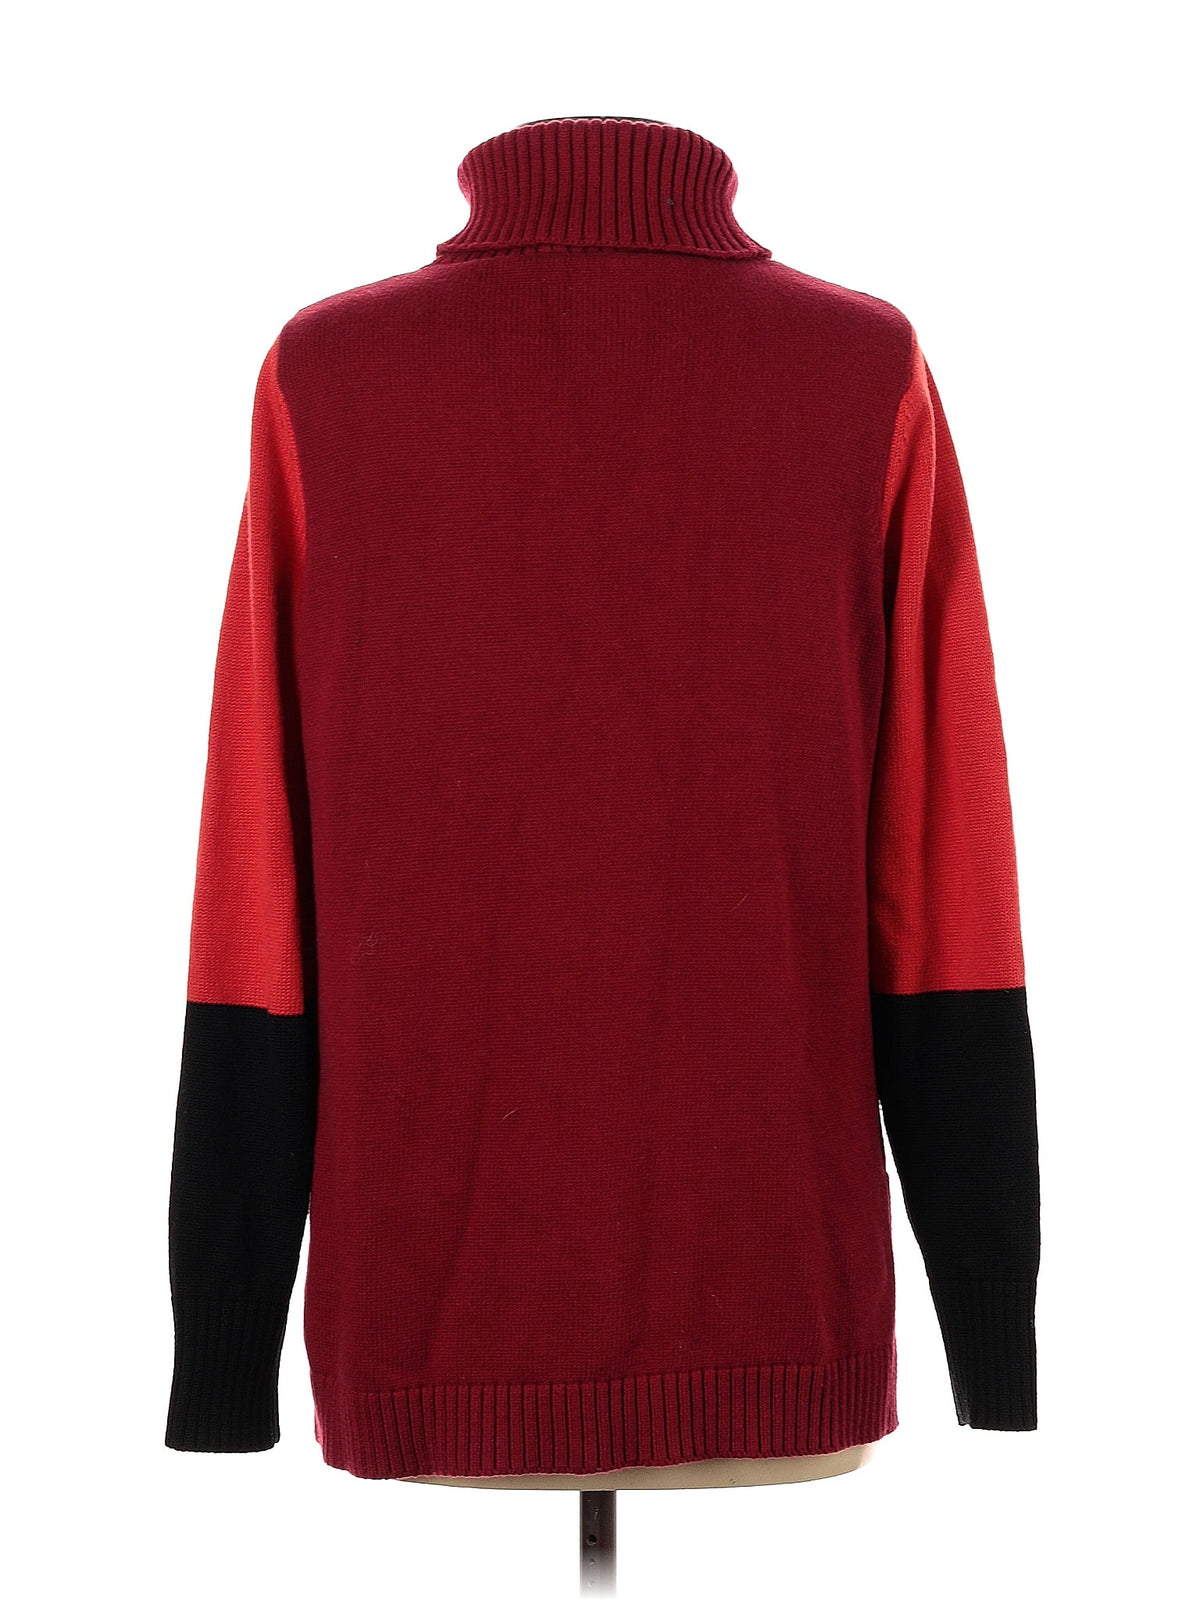 Turtleneck Sweater size - M